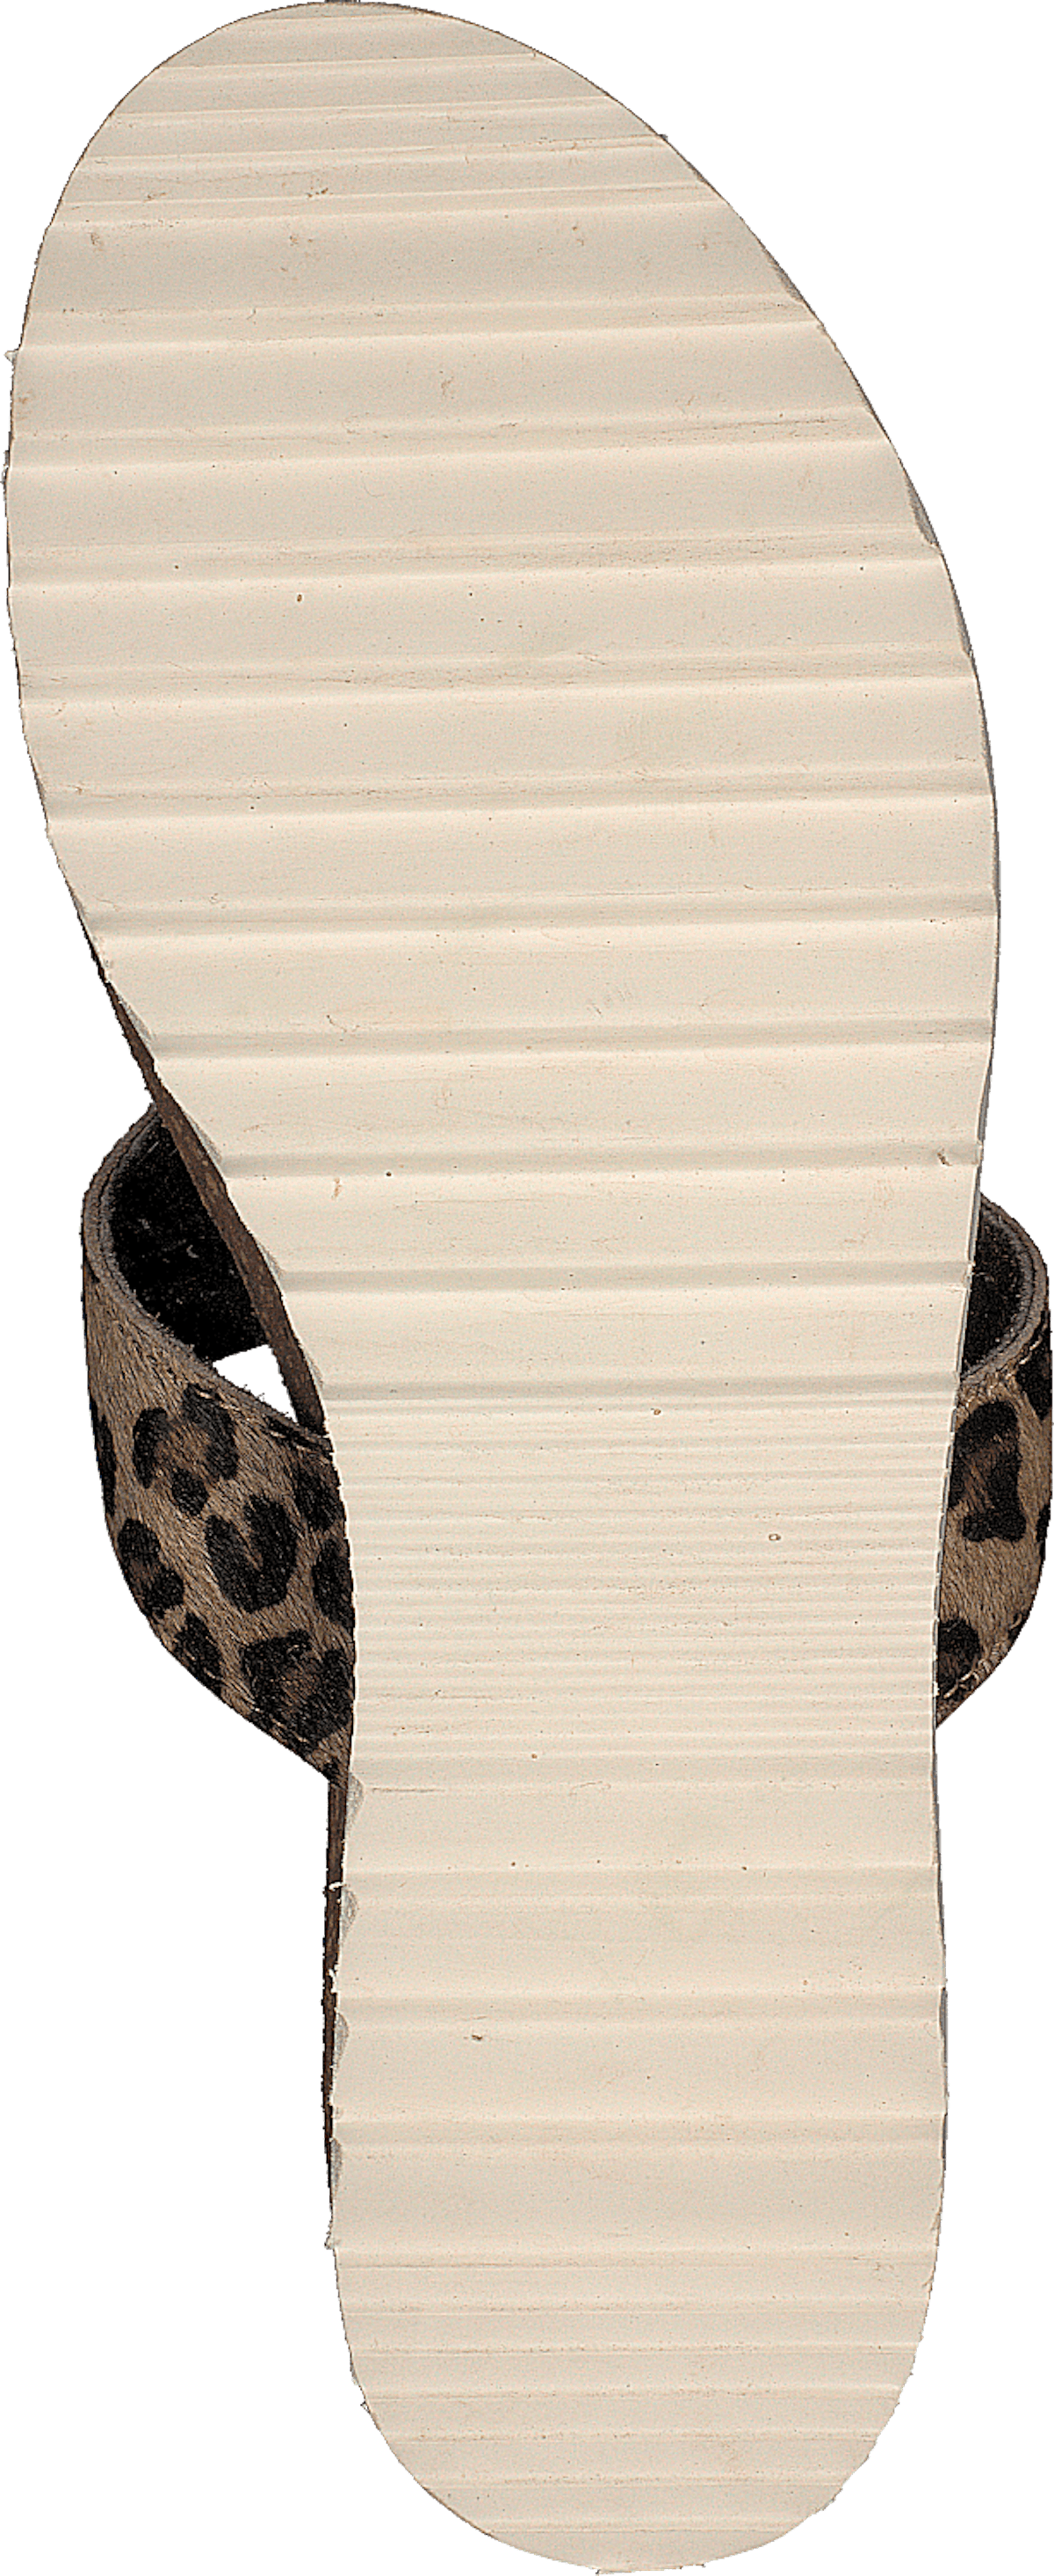 Animal sandal Leopard